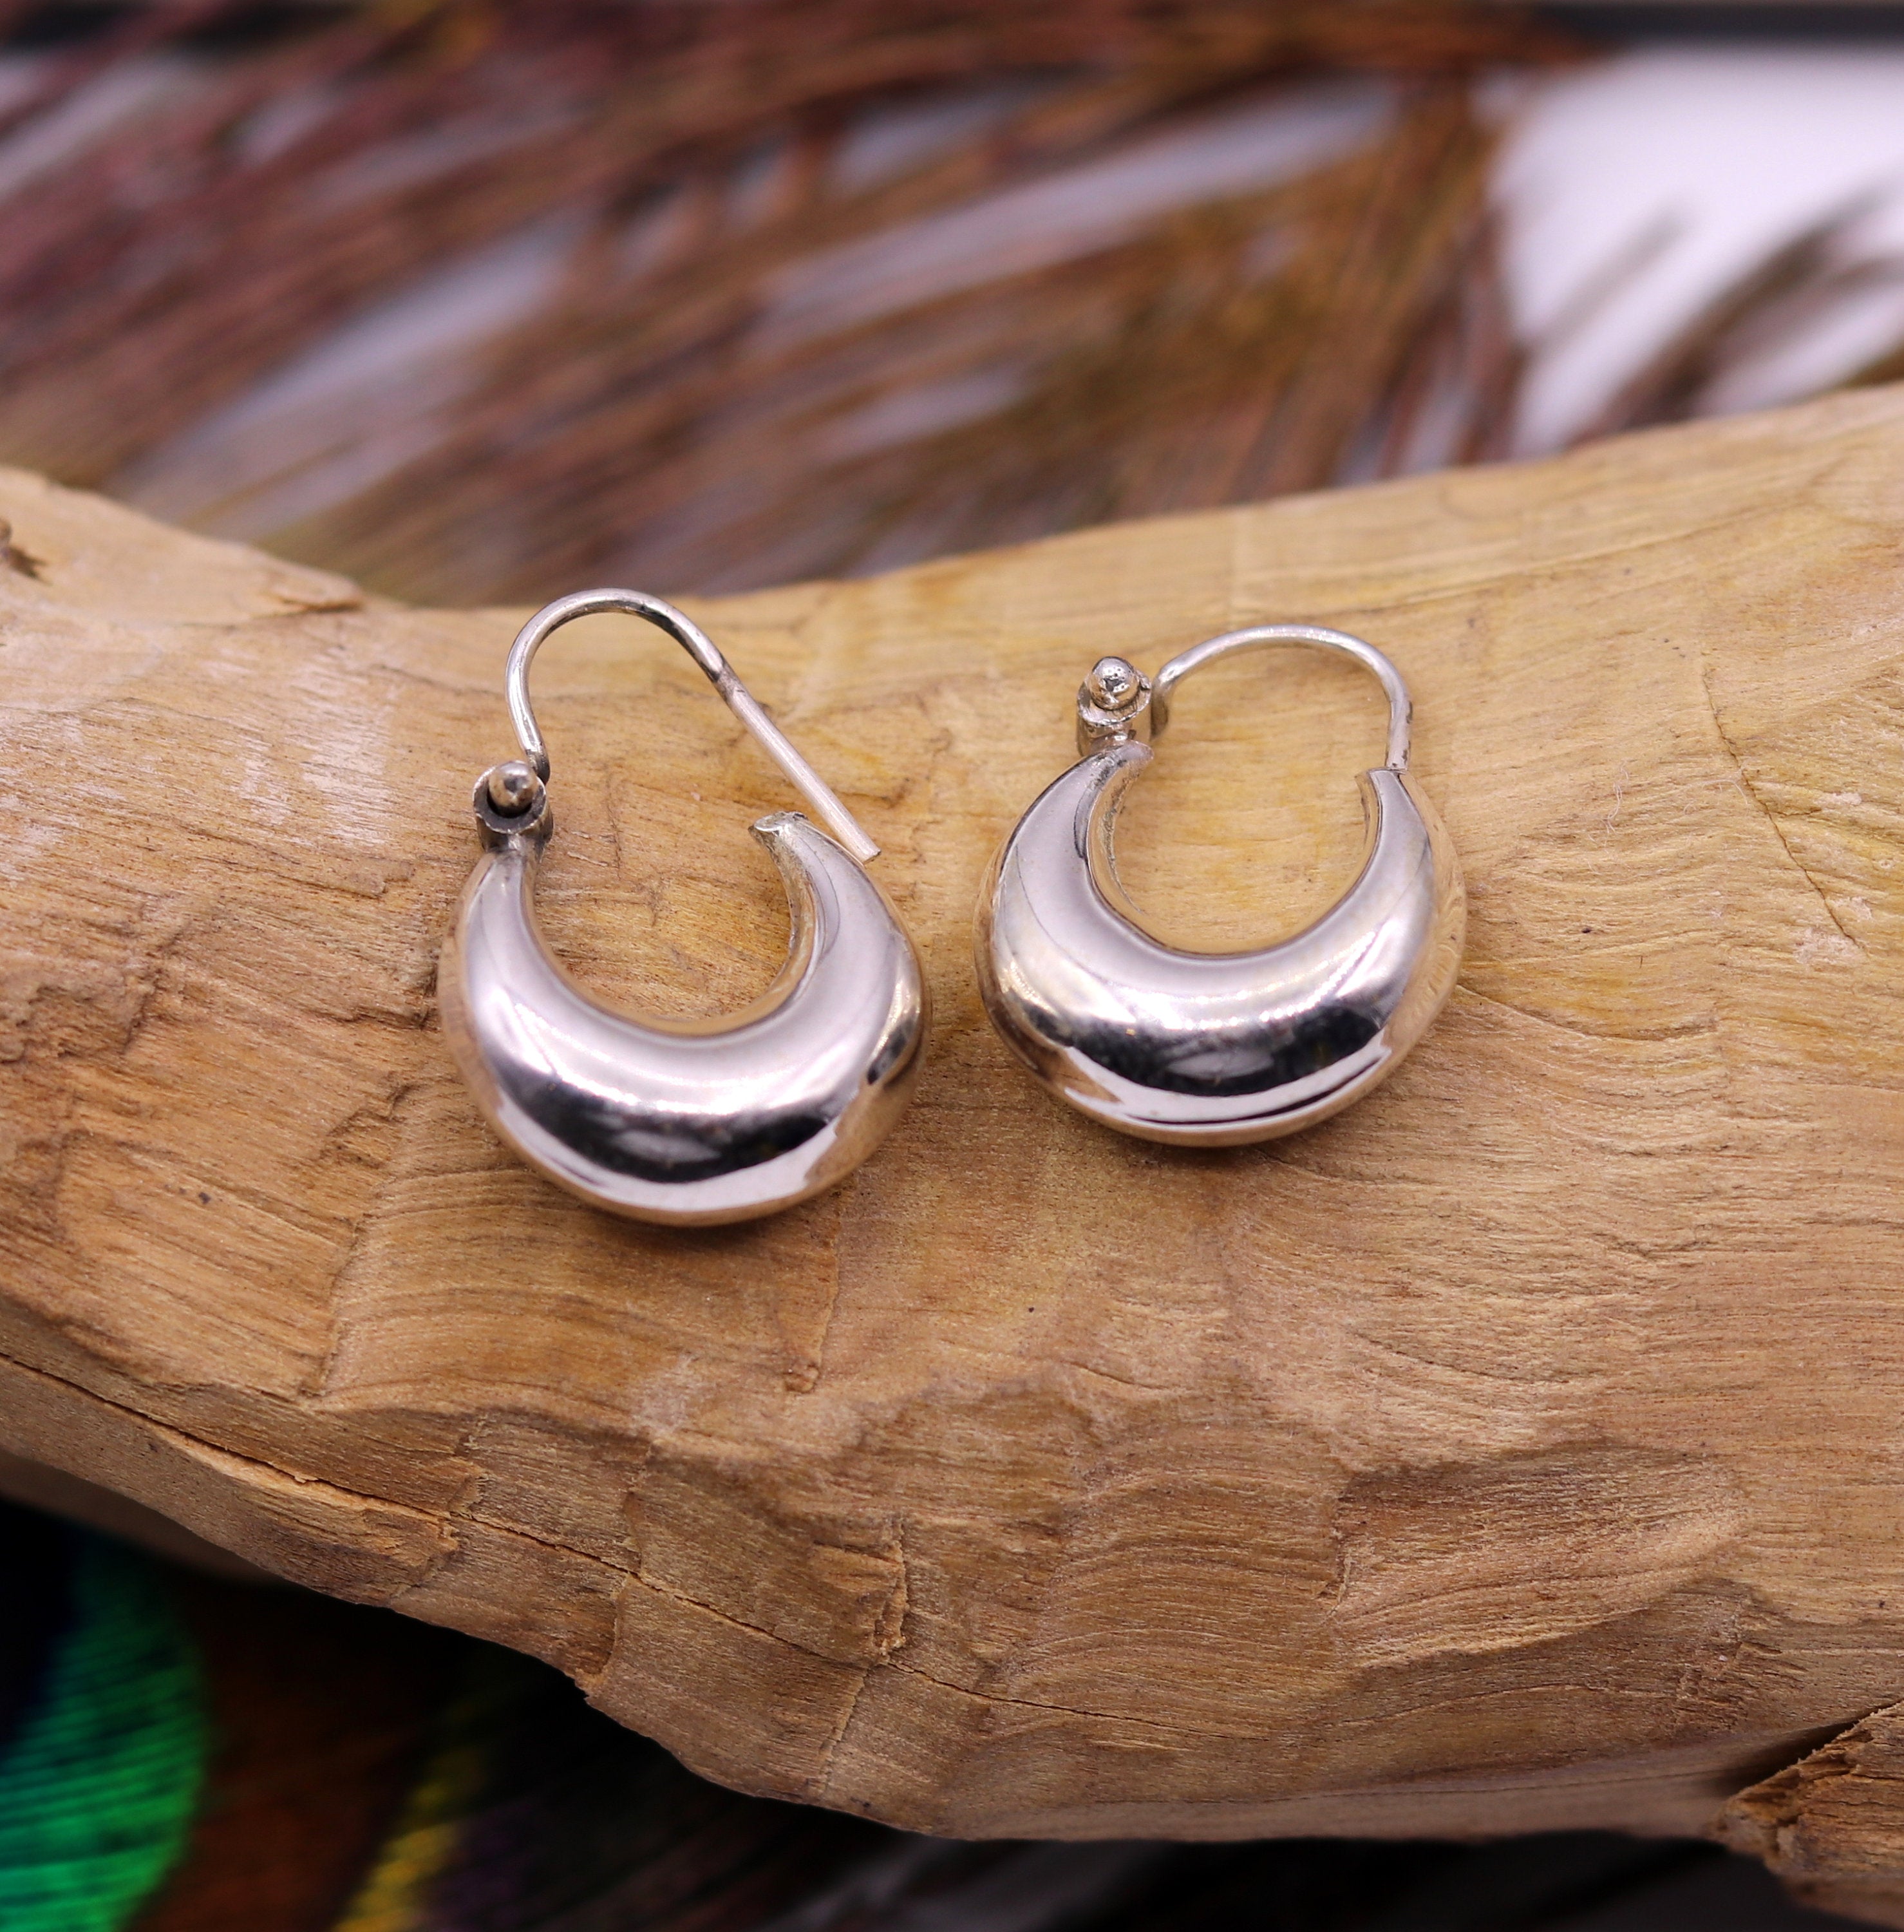 Buy 925 Silver Bali Hoop Earrings, 5.5 MM Thick Hoop Earrings, Silver Wires  Hoop Earrings. Party Wear Earrings, Gift for Her, Christmas Gift Online in  India - Etsy